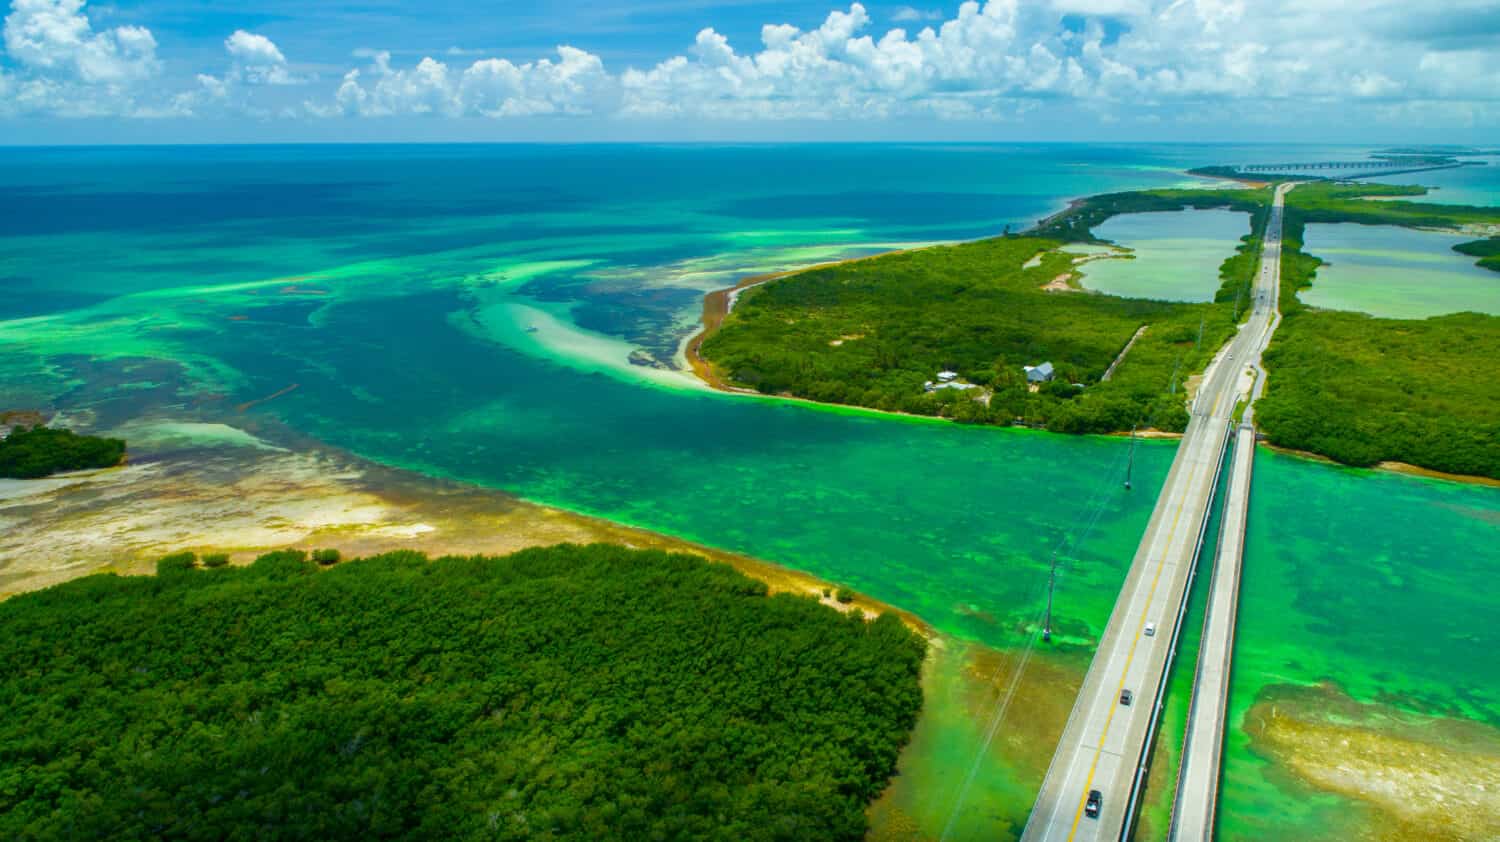 Overseas highway to Key West island, Florida Keys, USA. Aerial view beauty nature.